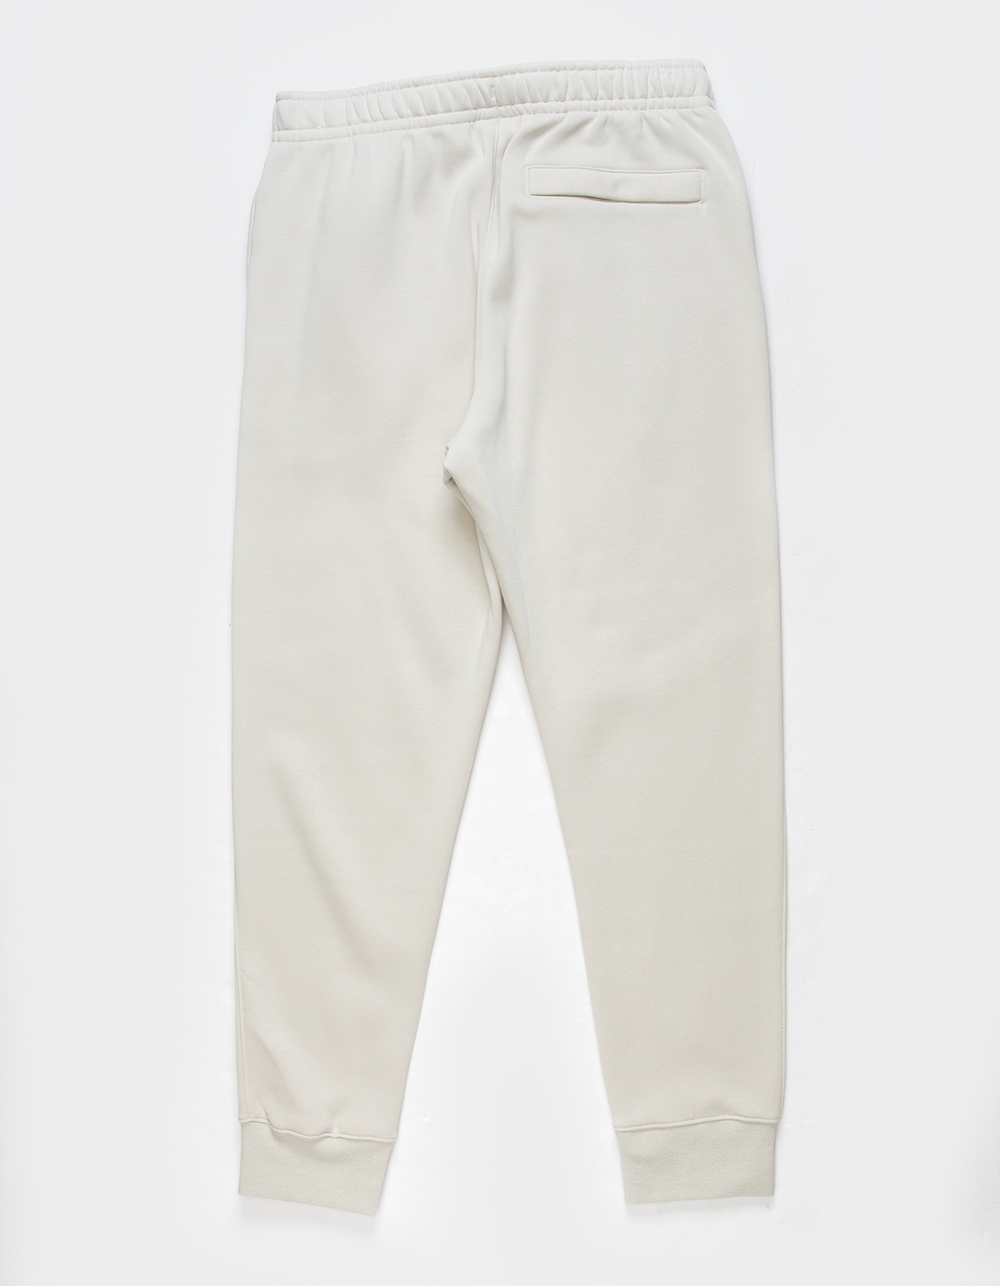 Creamy white sweatpants - Naiwear Men's Collections